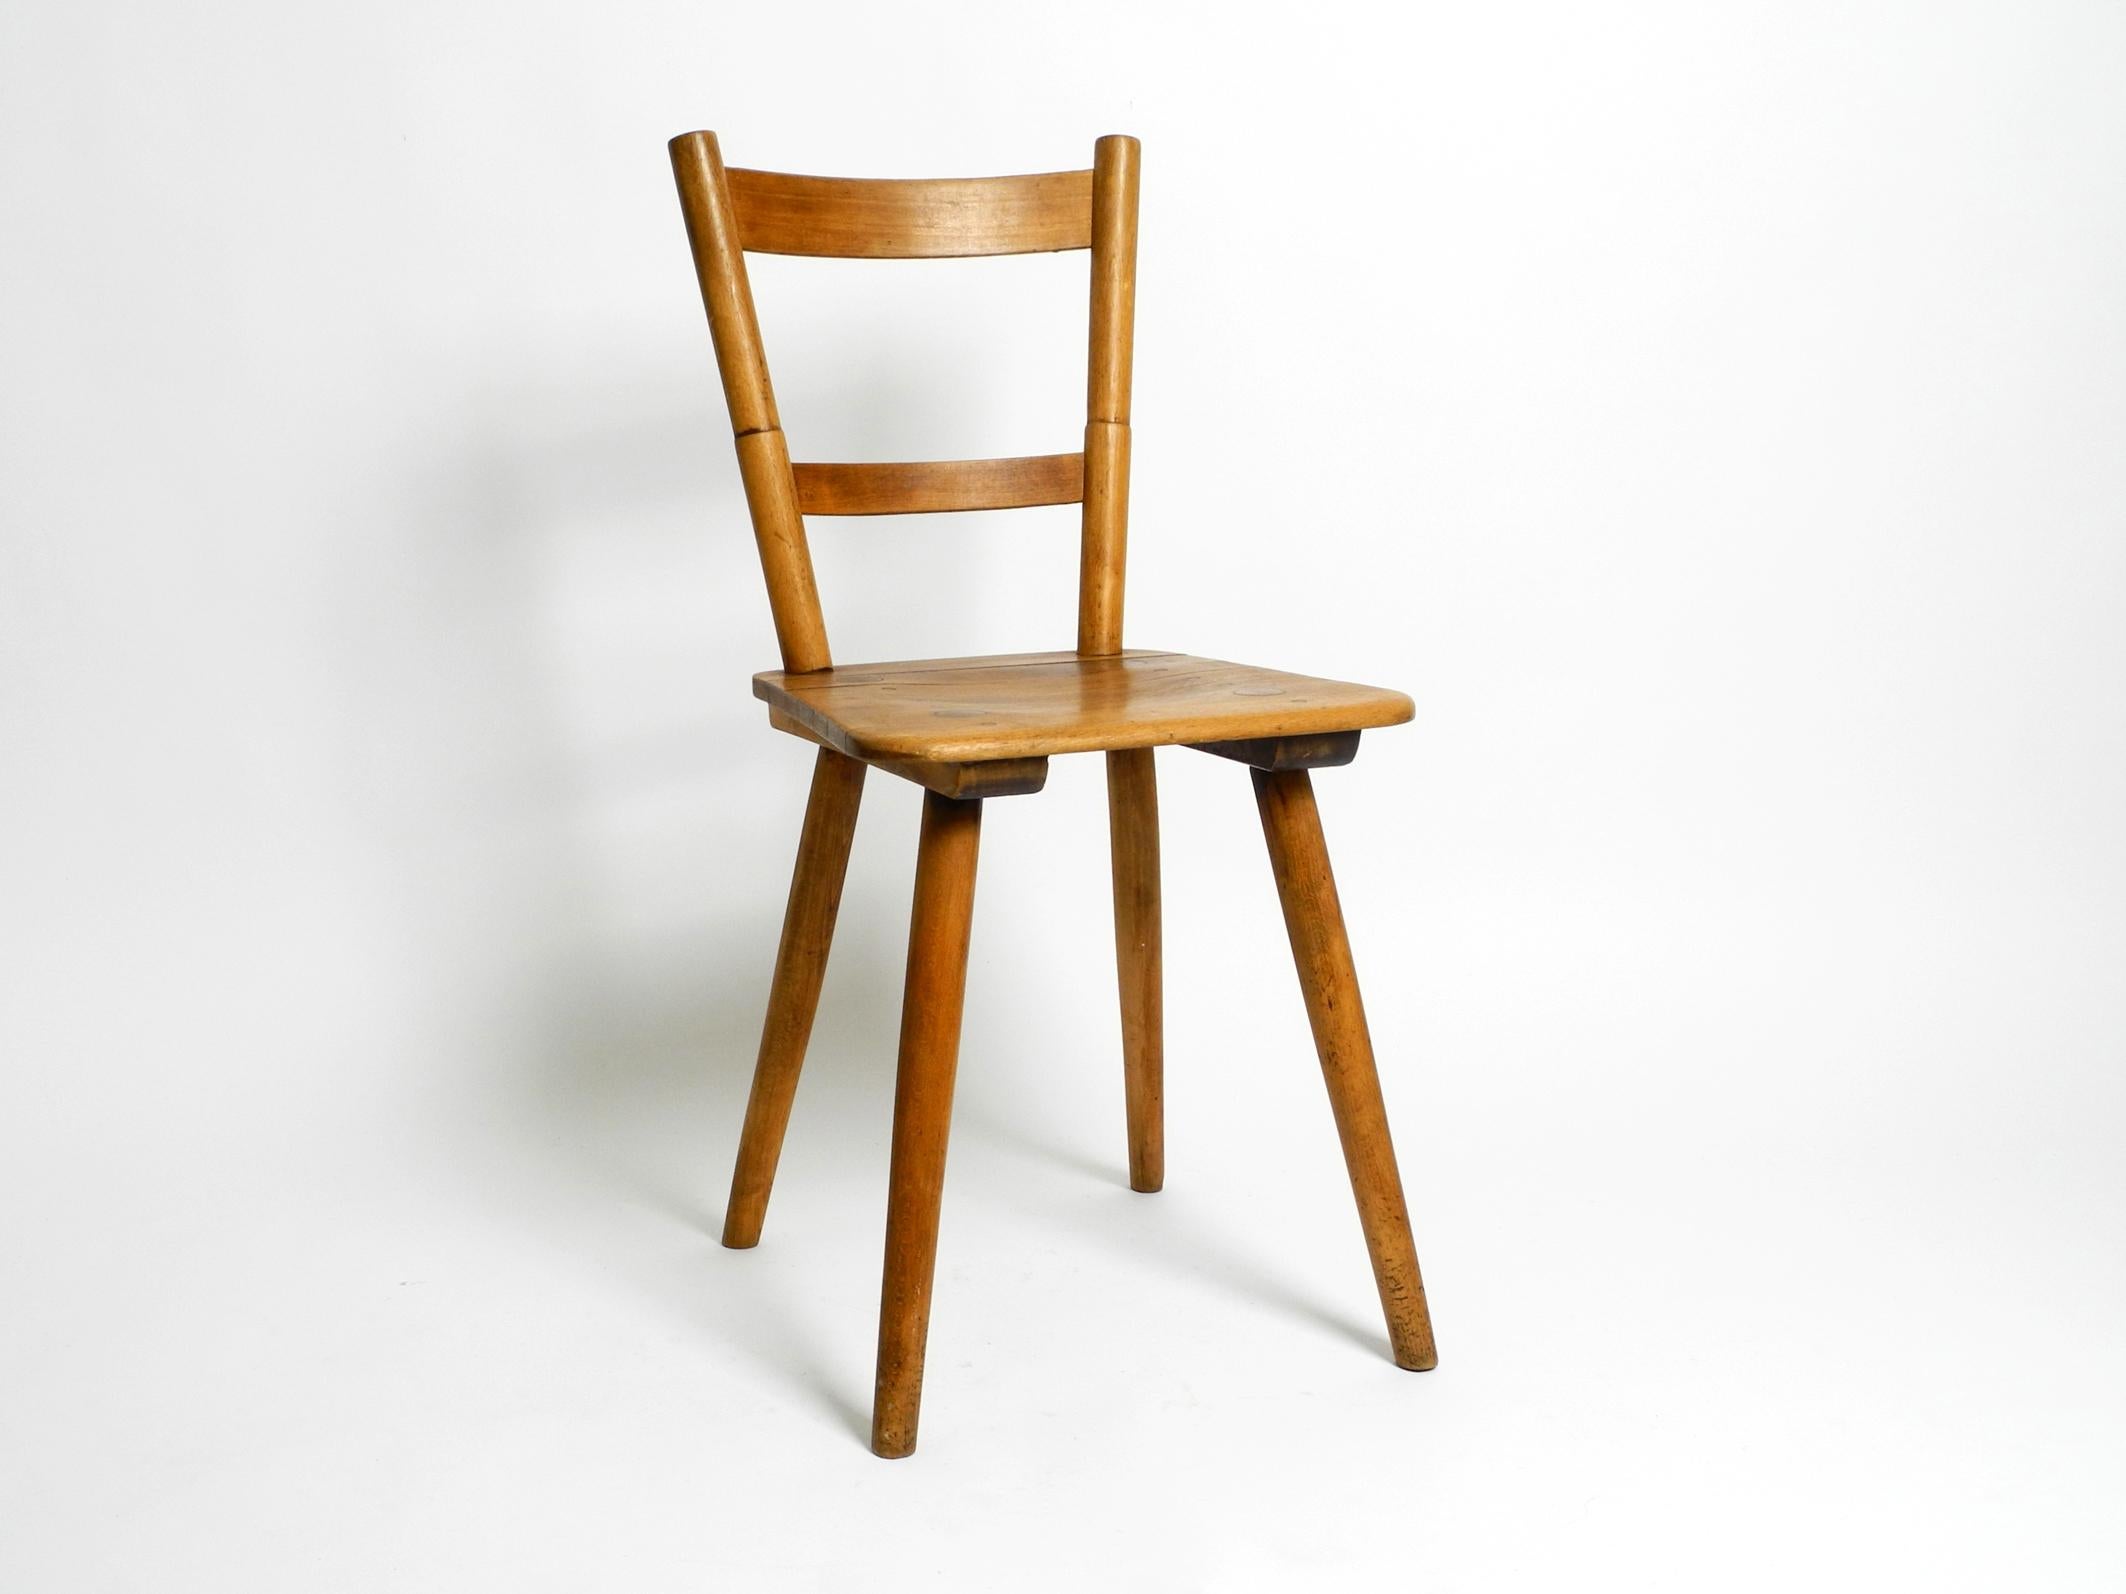 1930s Tübinger chair by the architect Prof. Adolf Gustav Schneck for Schäfer  For Sale 9